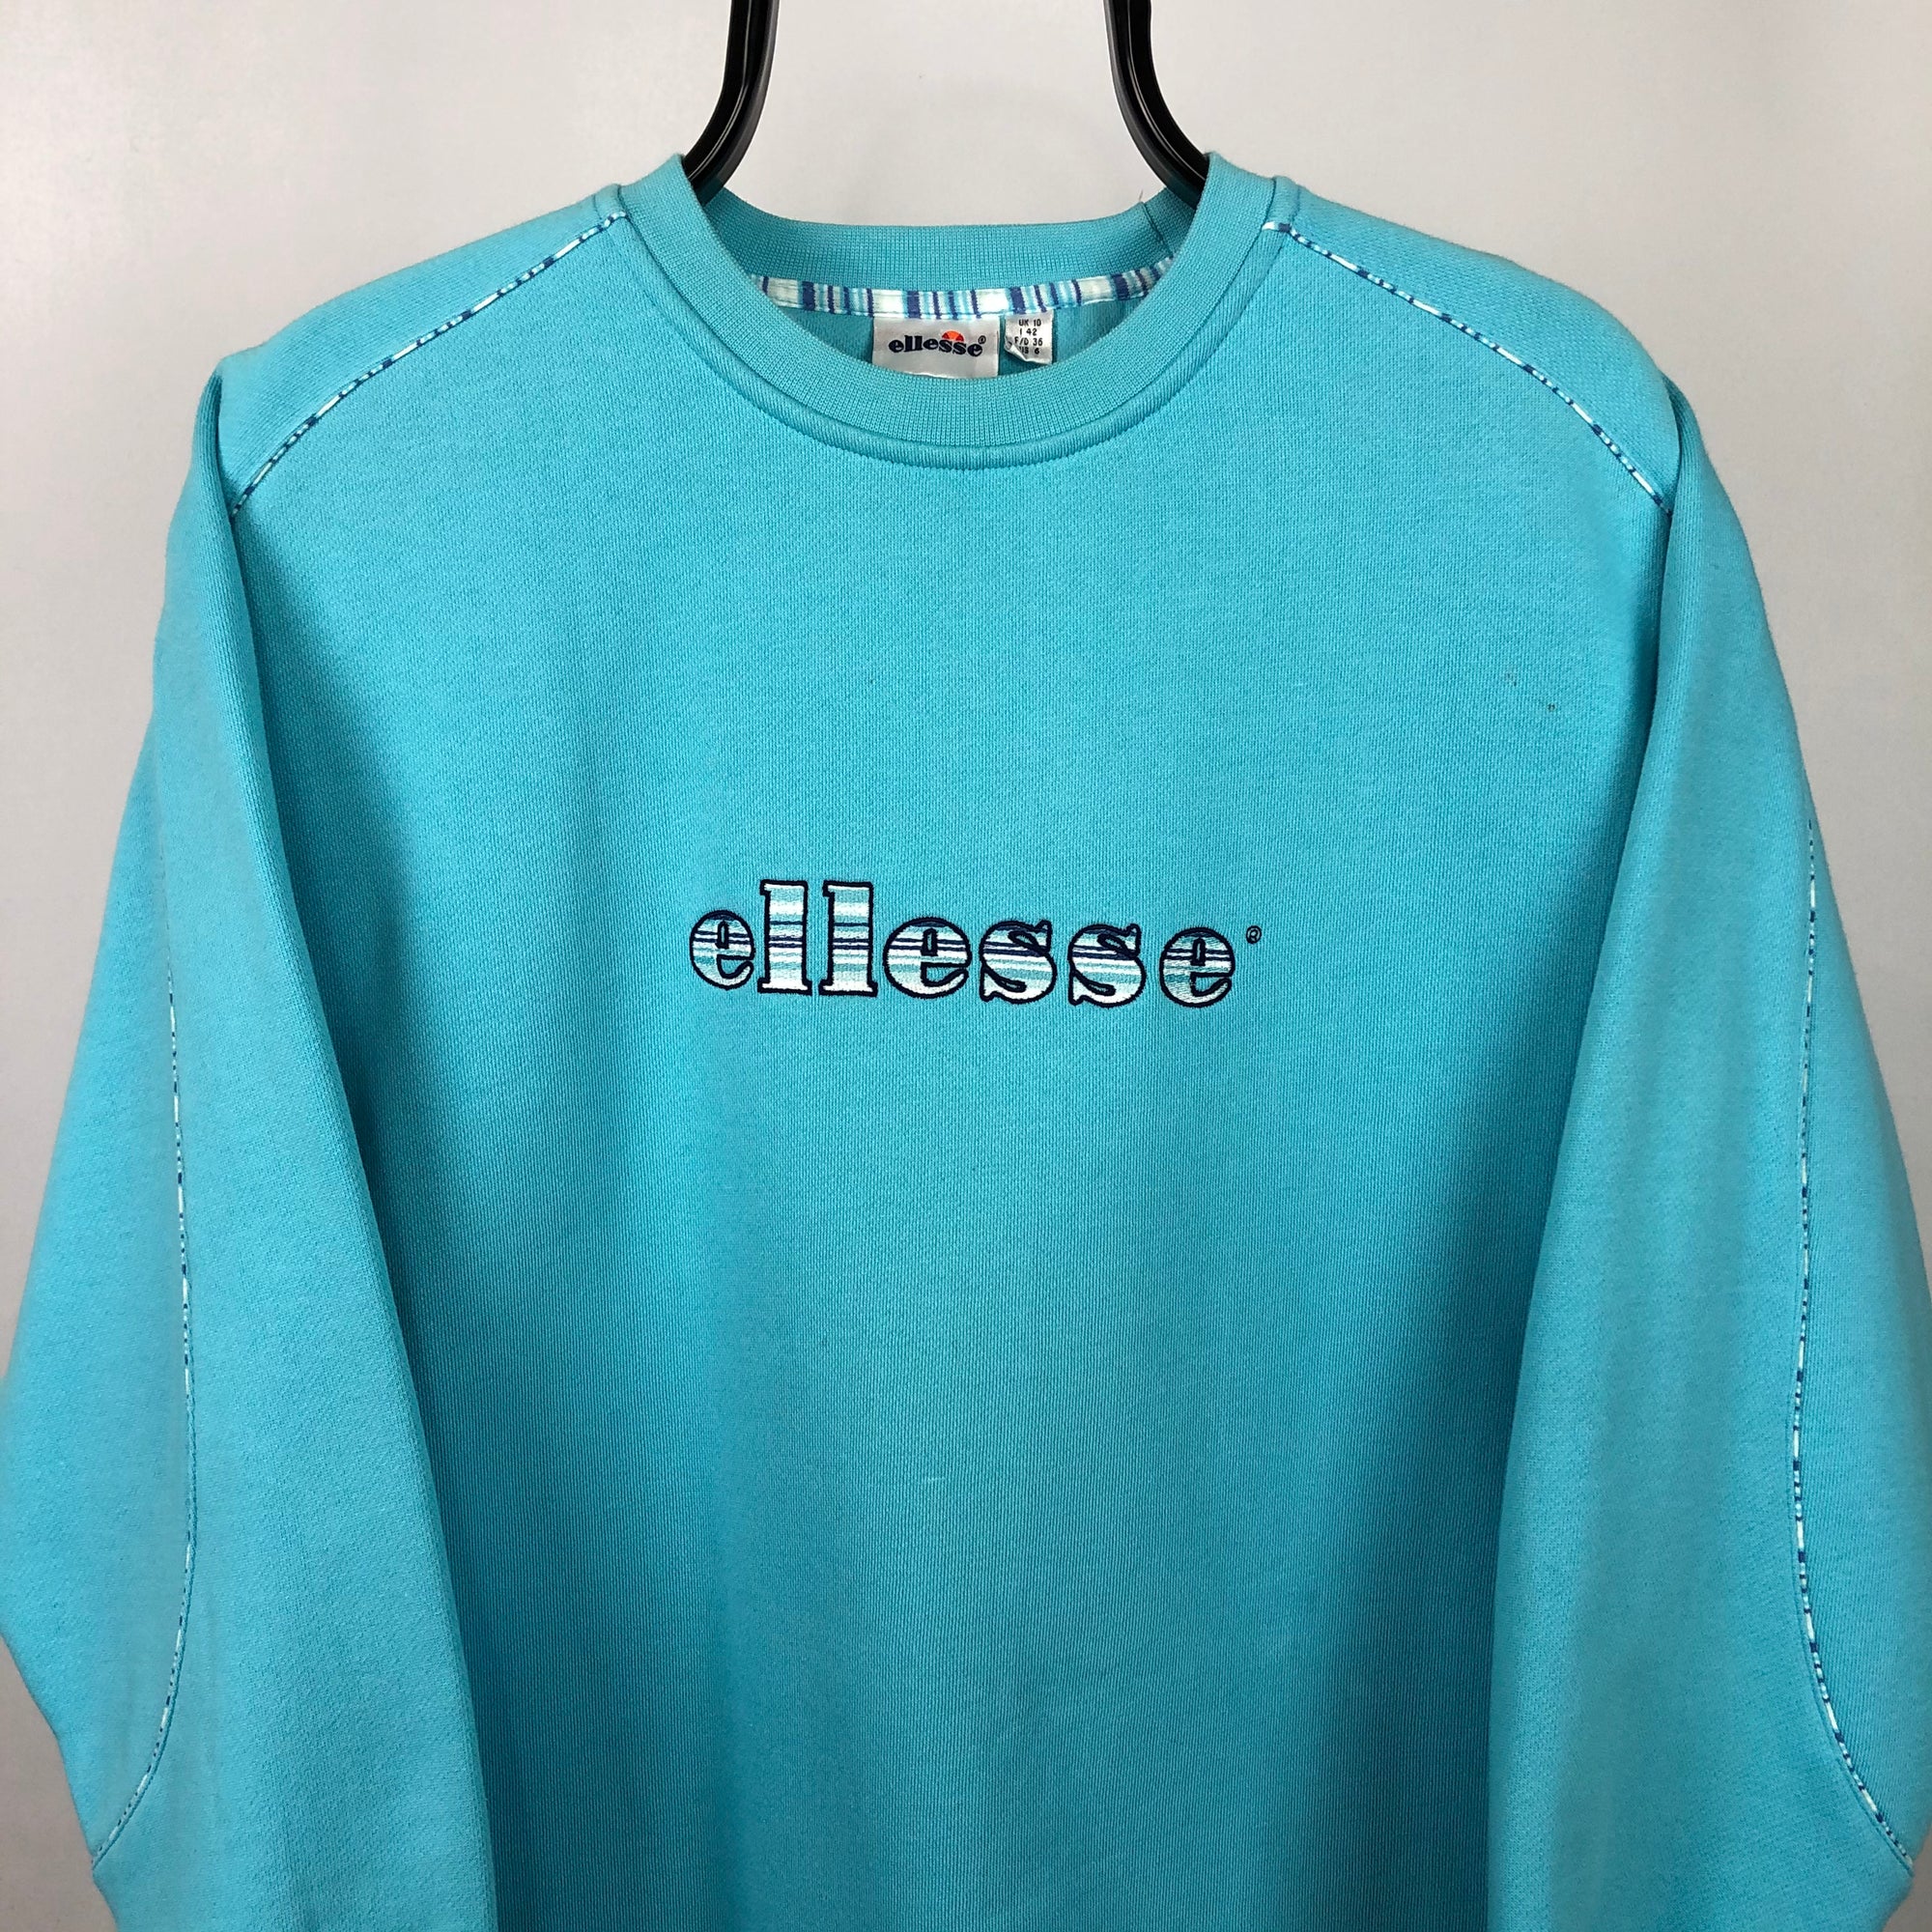 Vintage 90s Ellesse Spellout Sweatshirt in Light Blue - Men's Small/Women's Medium